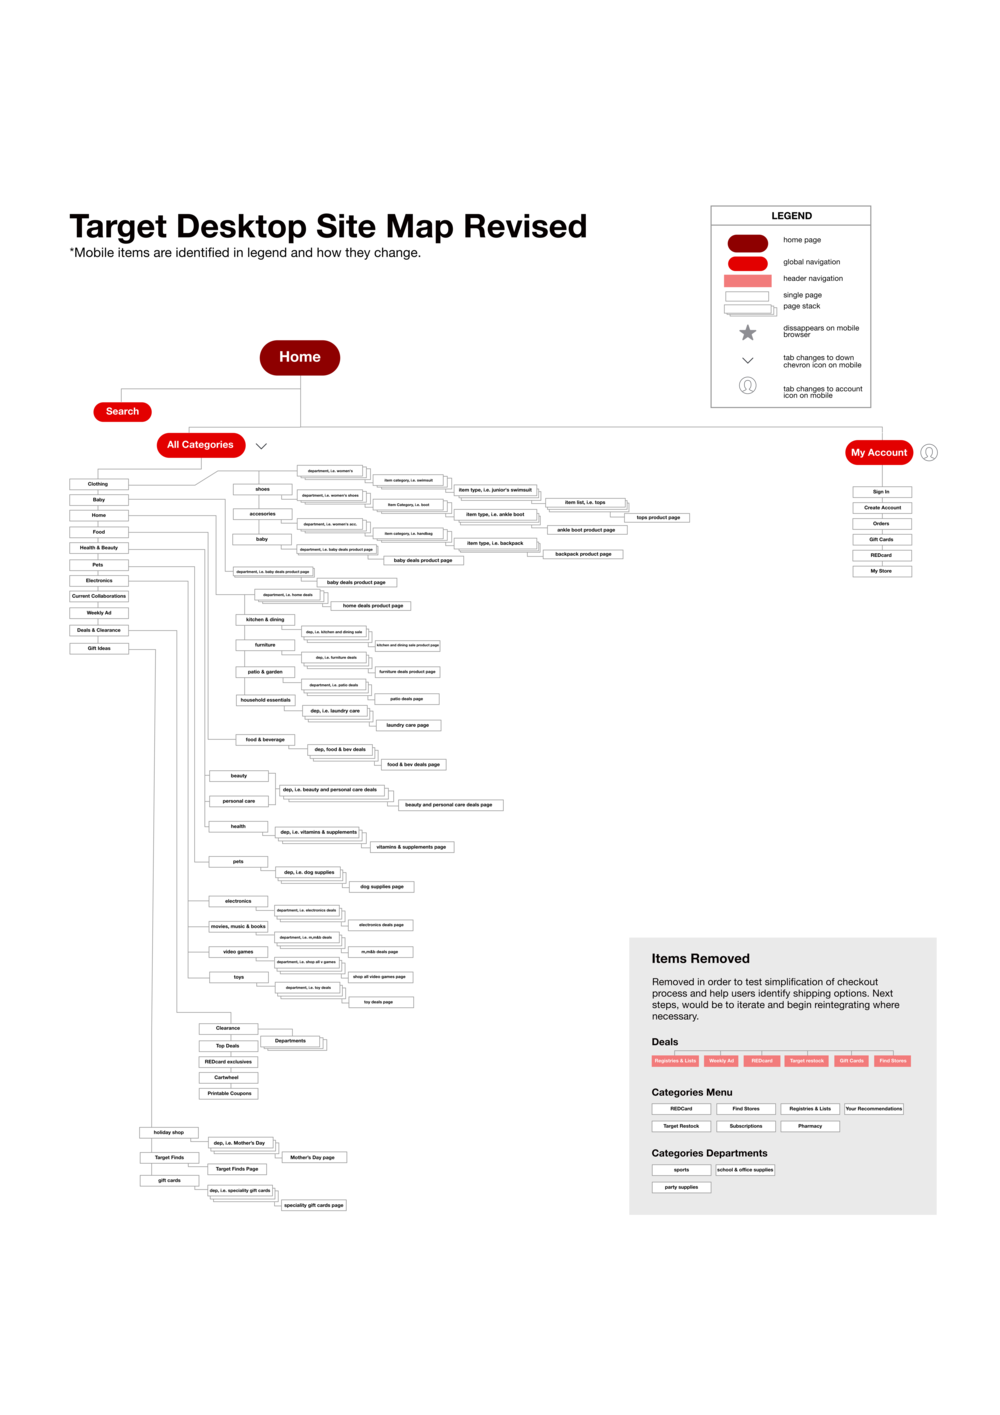  Target.com - Site Map, Revised 